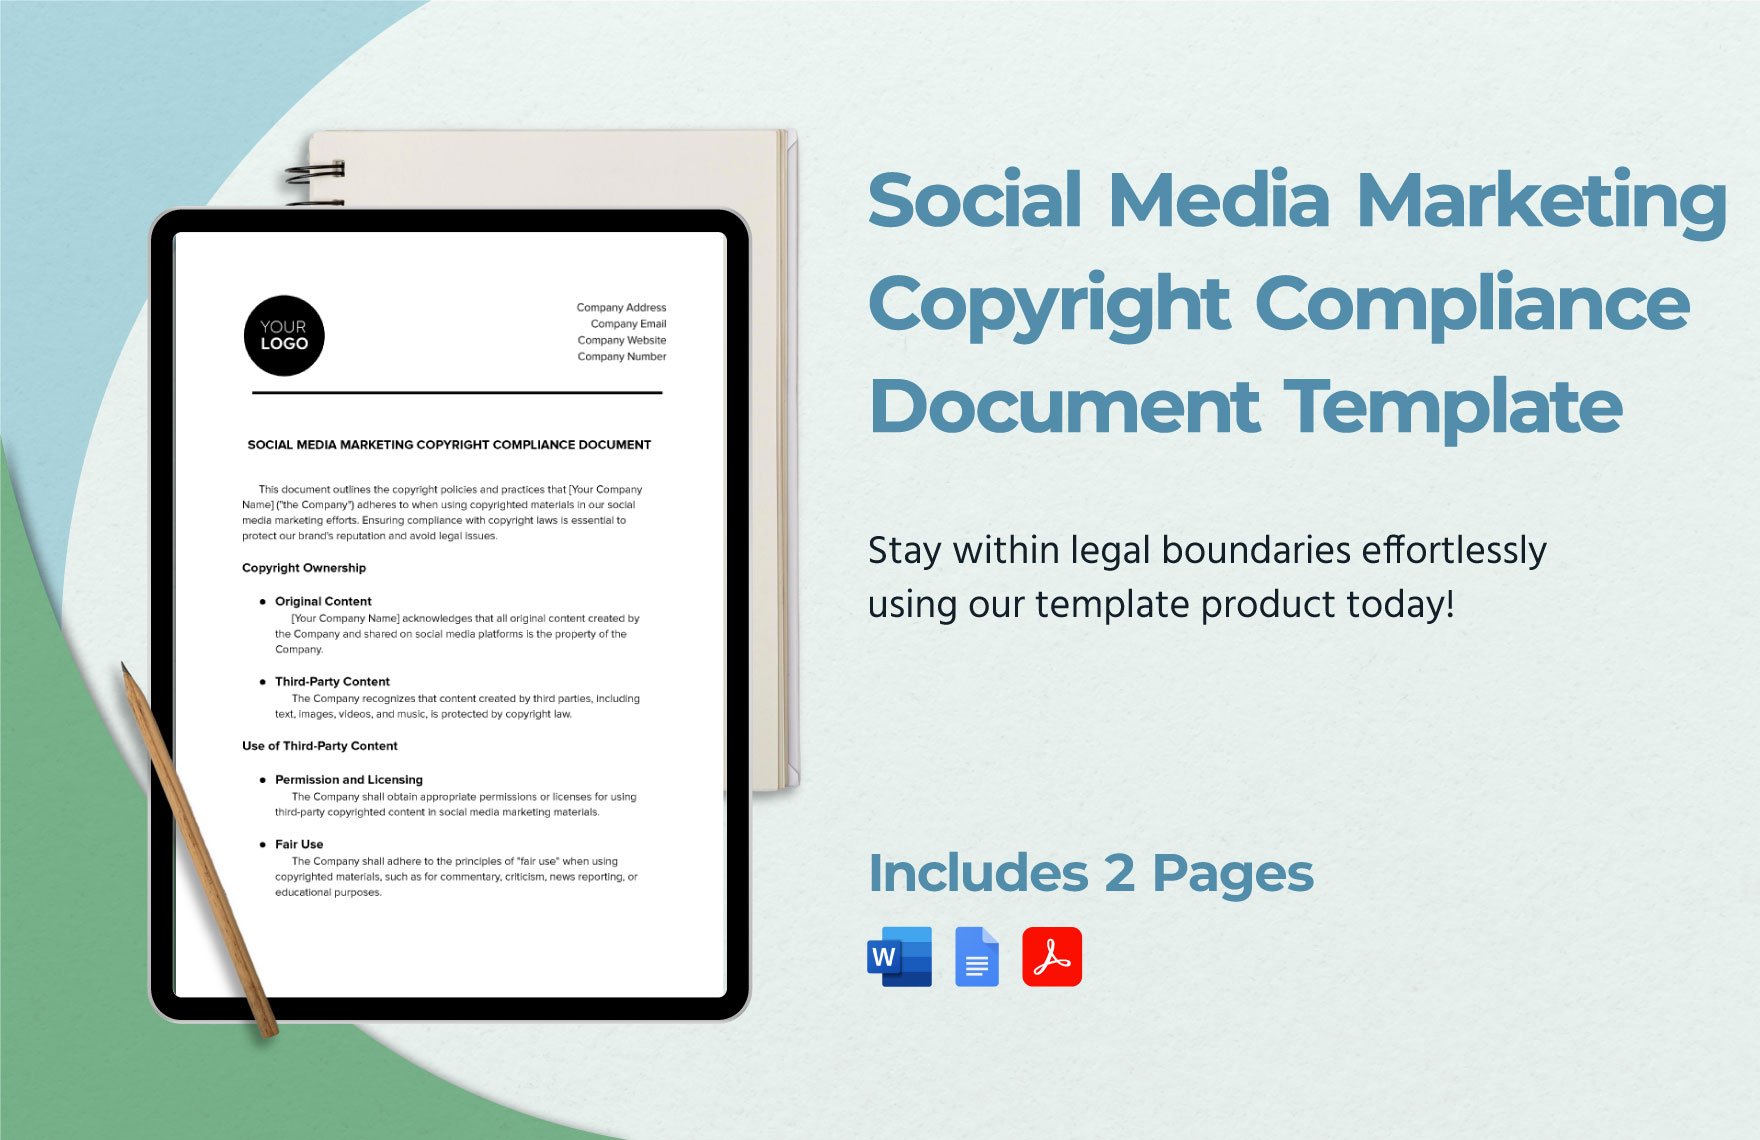 Social Media Marketing Copyright Compliance Document Template